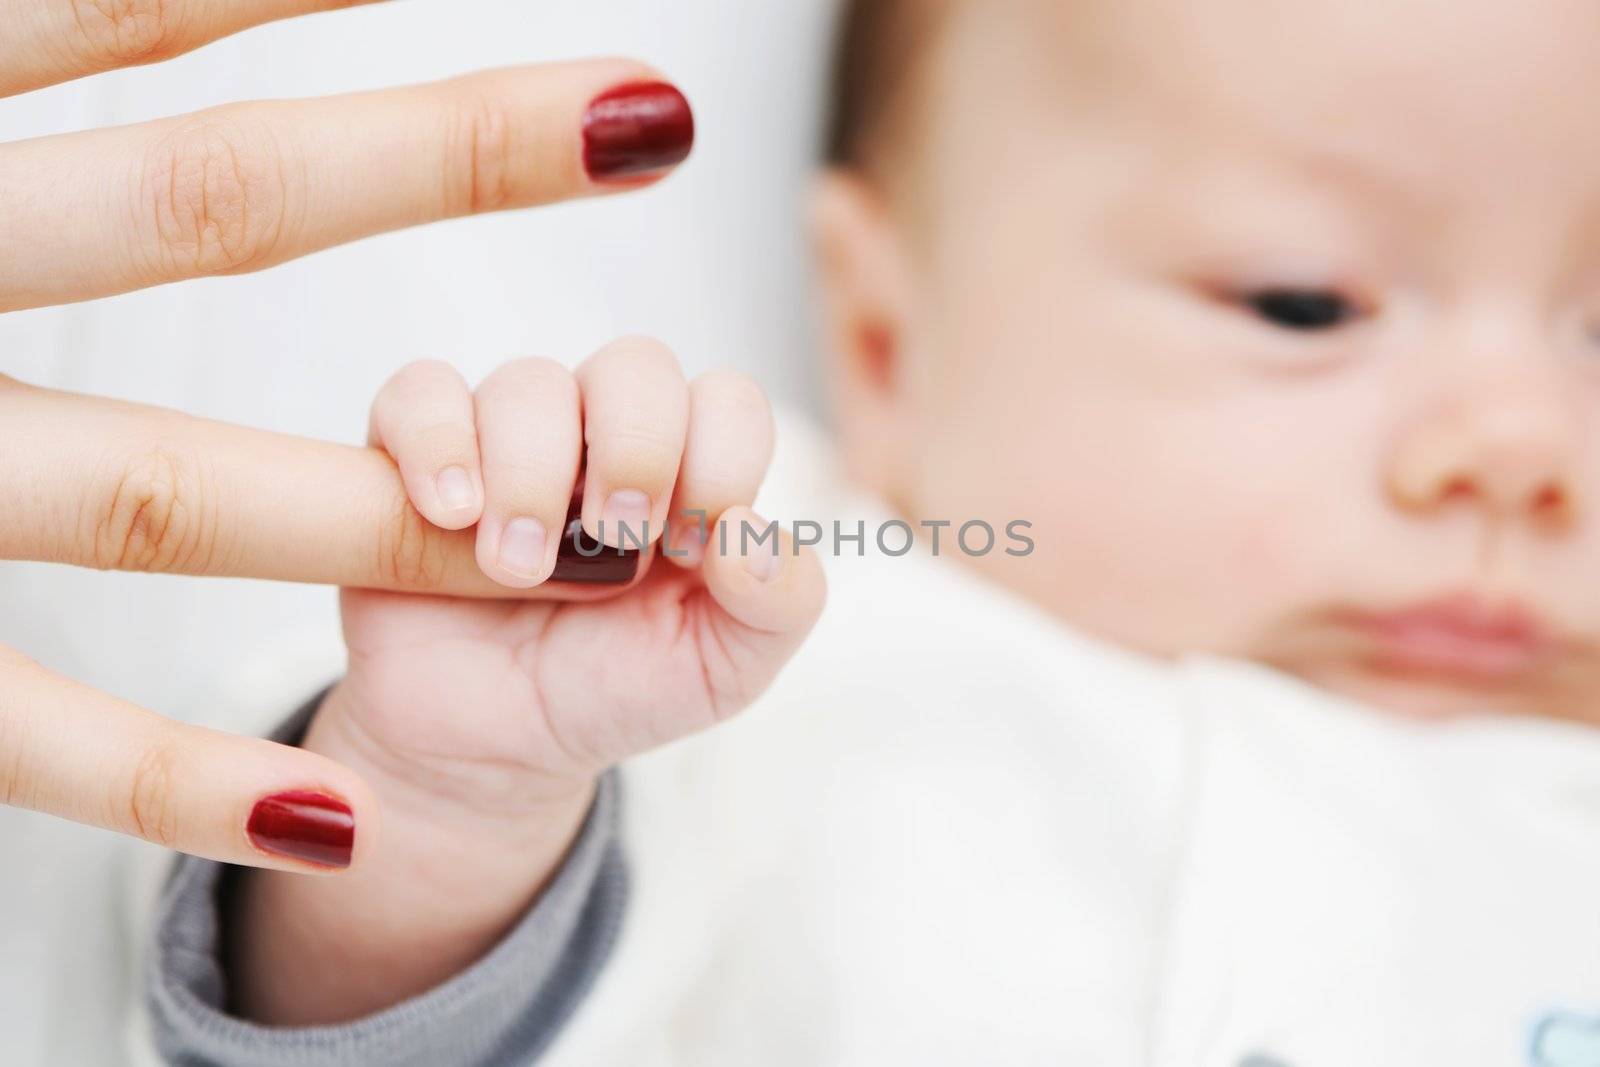 Newborn baby holding mother's finger